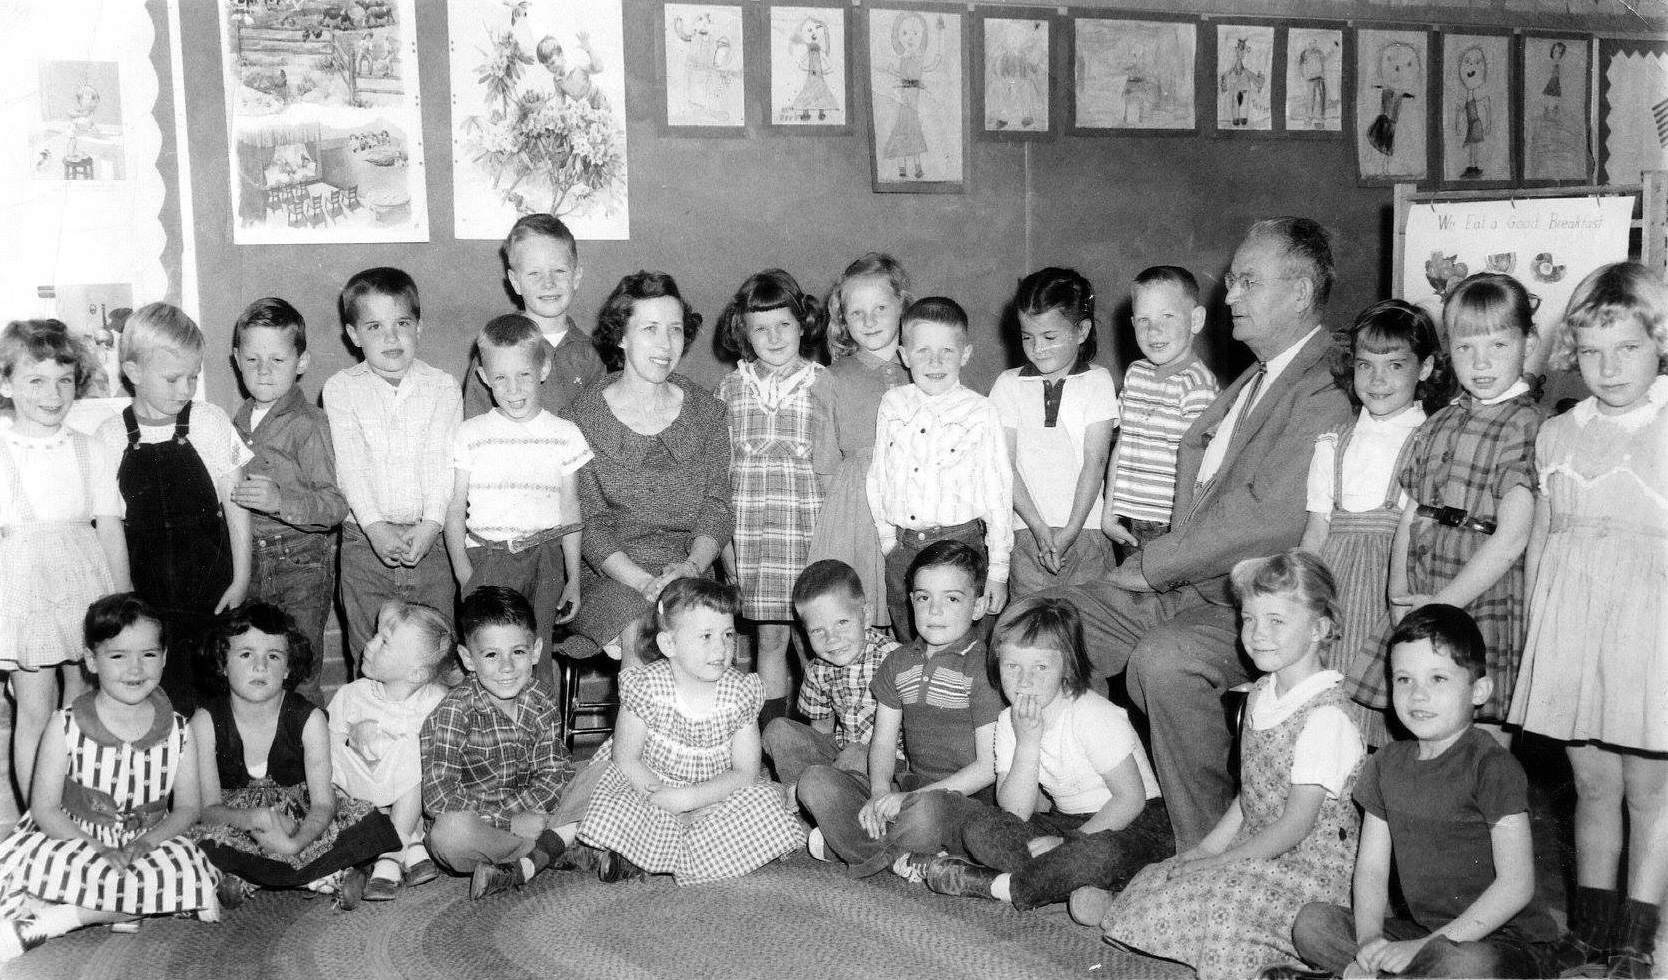 Mrs. Hazel Fawson's 1959-1960 kindergarten class at West Elementary School